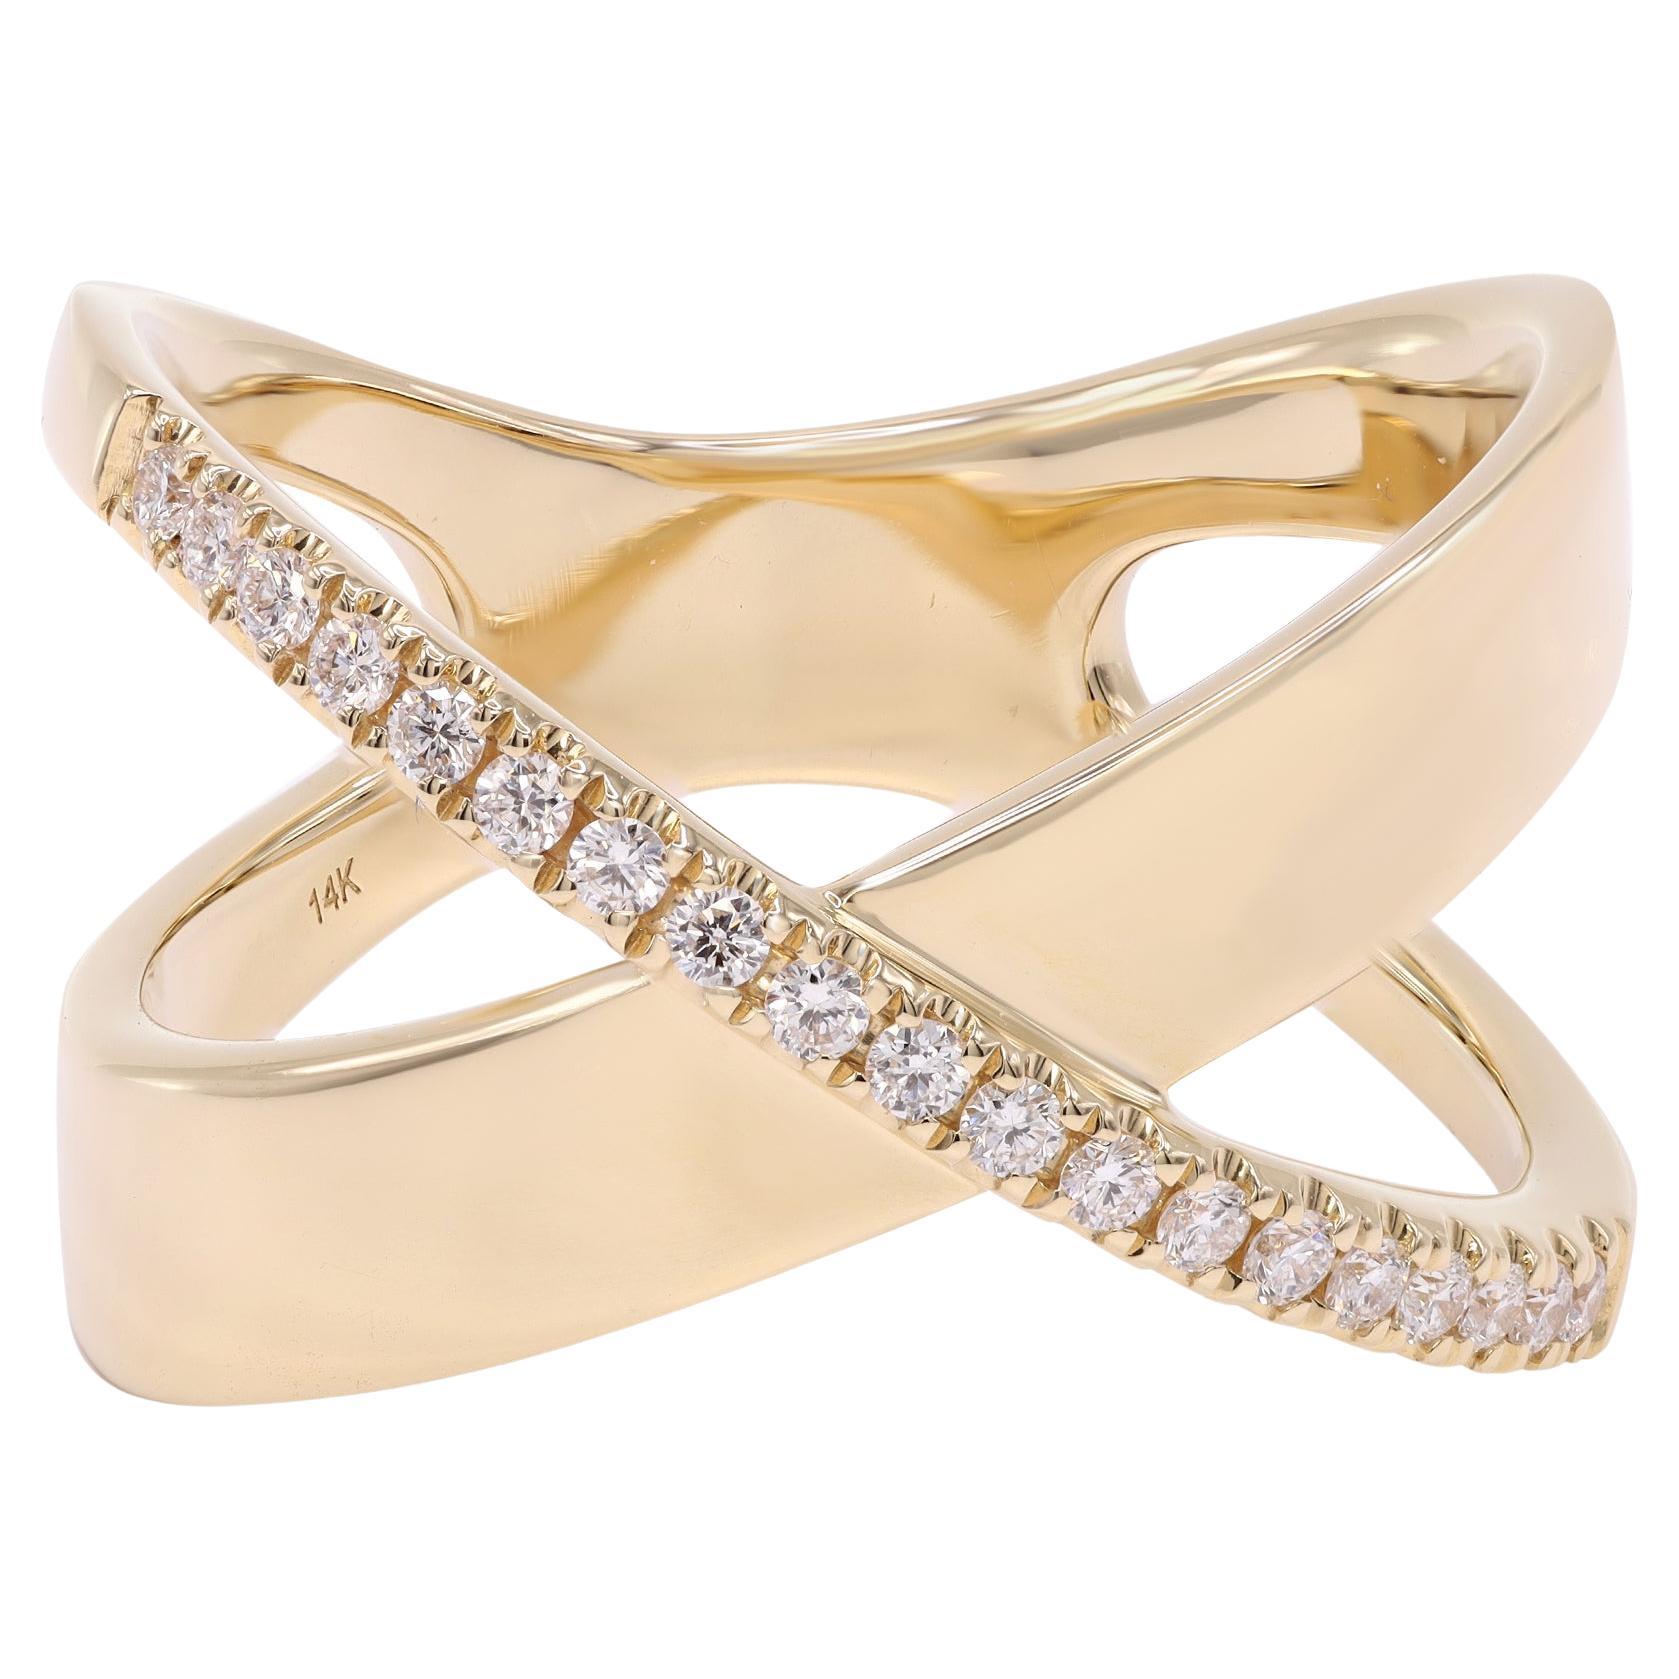 Rachel Koen Pave Diamond X Ring Band 14K Yellow Gold 0.19Cttw Size 7 For Sale